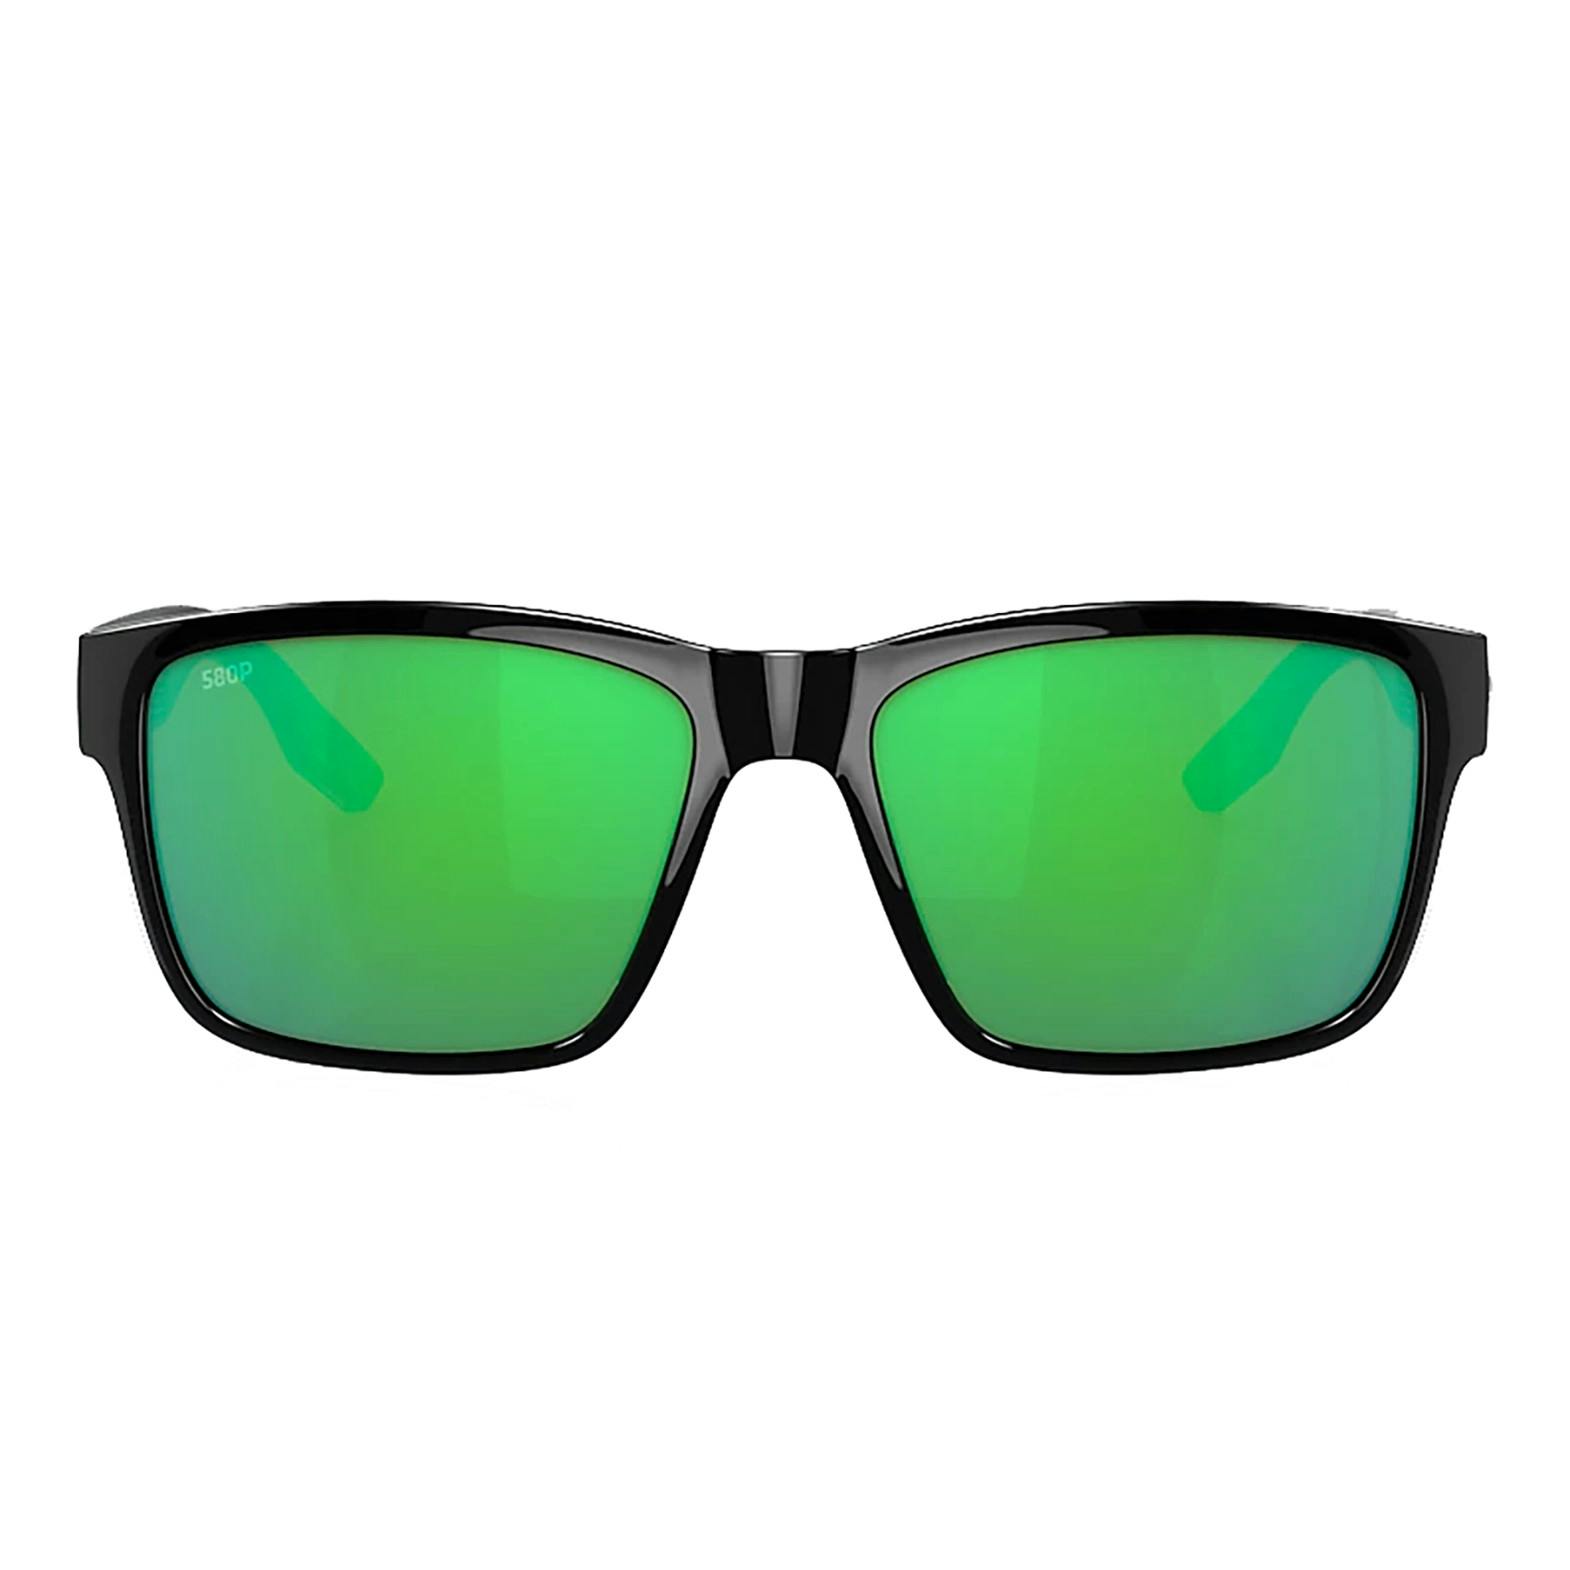 Costa Paunch Sunglasses Front 2 -Black